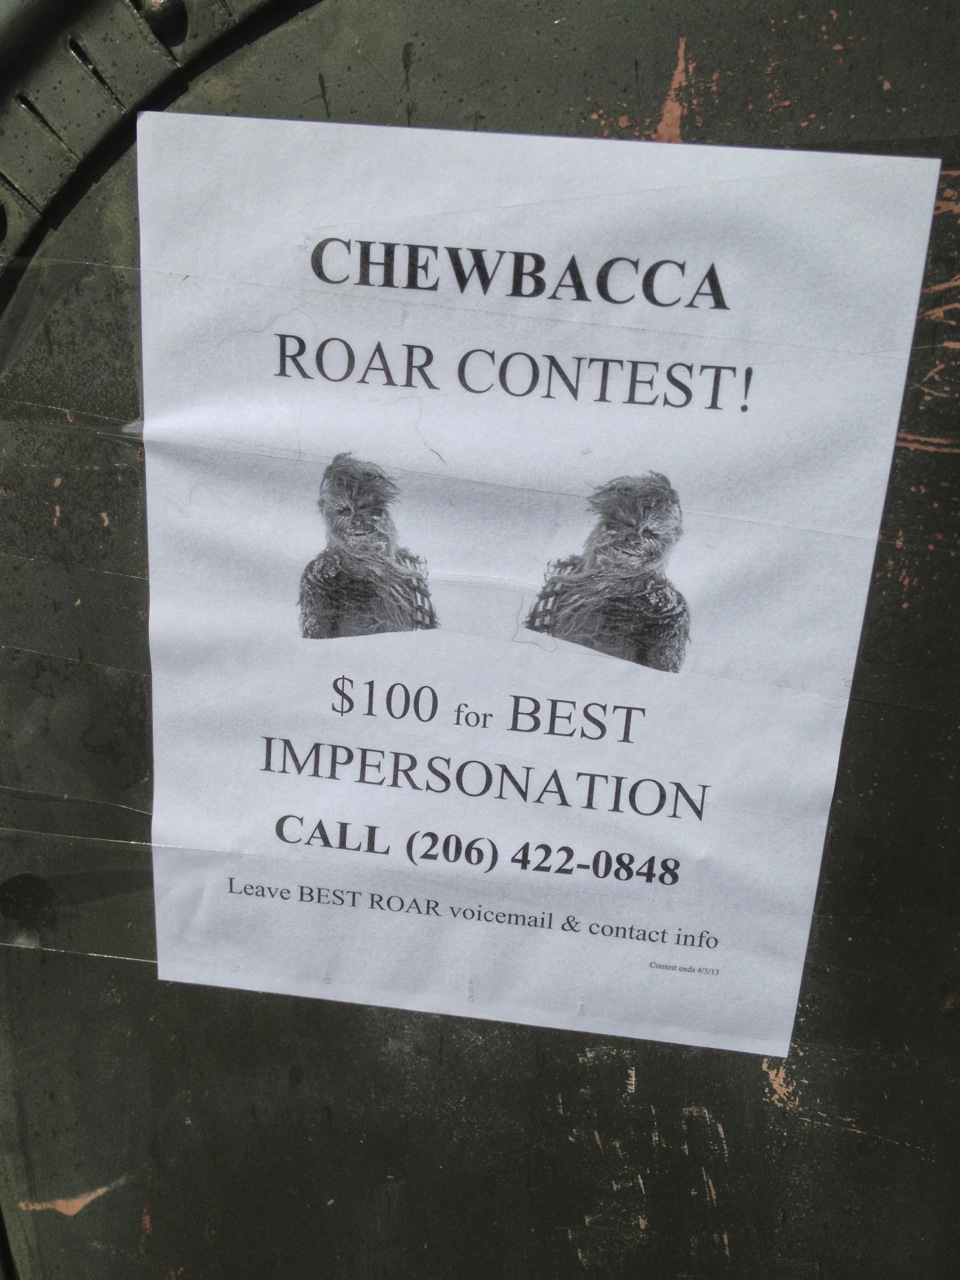 Chewbacca contest